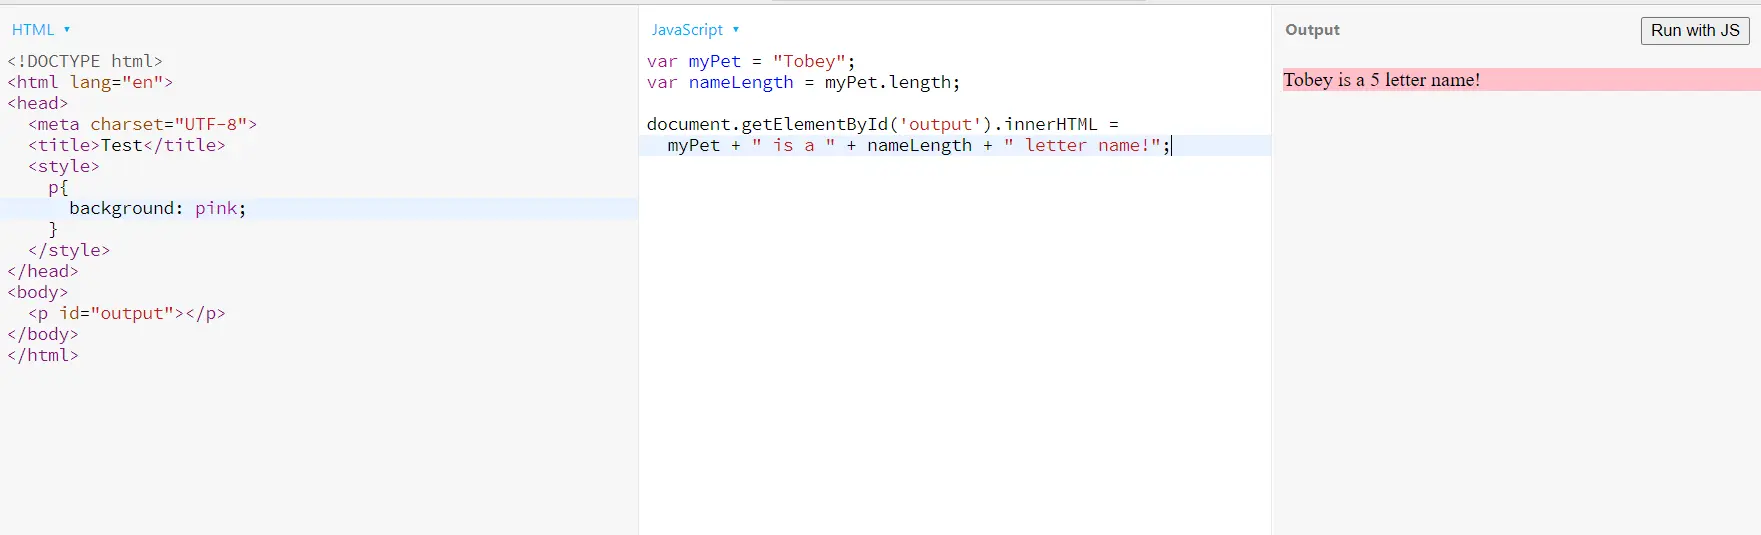 benutzerdefinierte js-Variable in html